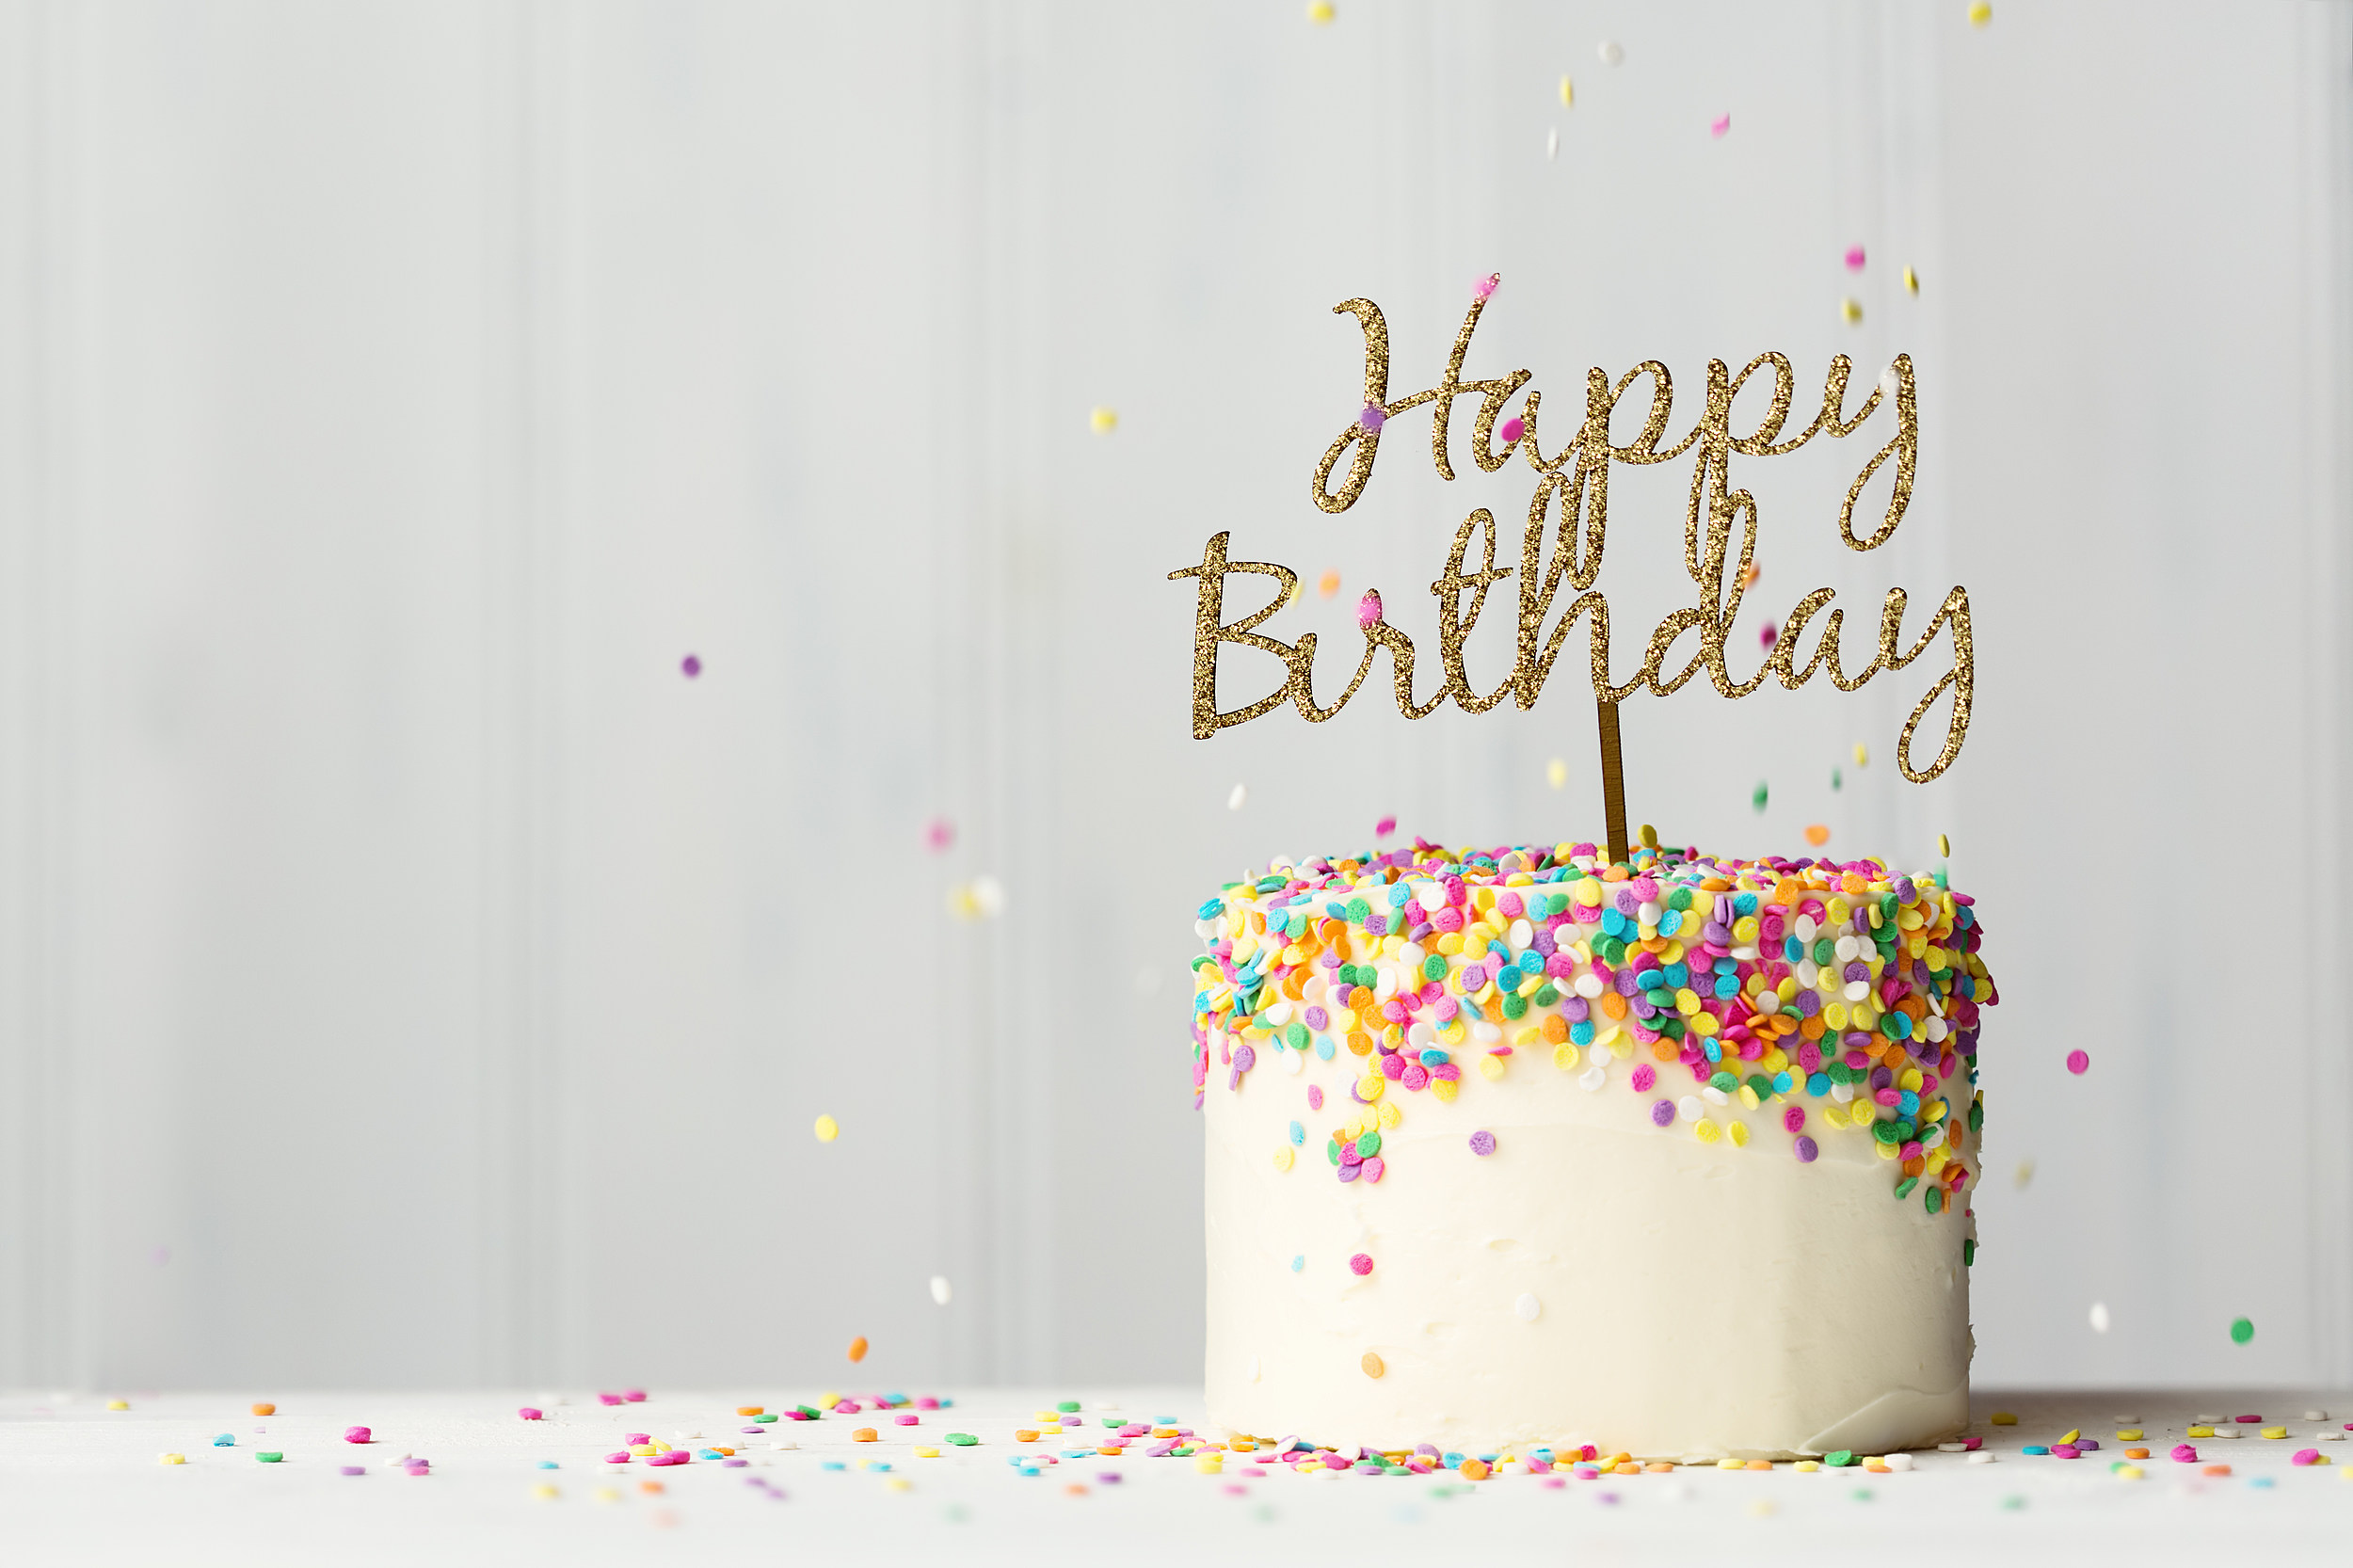 4 LIMITED EDITION KIT KAT BIRTHDAY CAKE FLAVOR | eBay